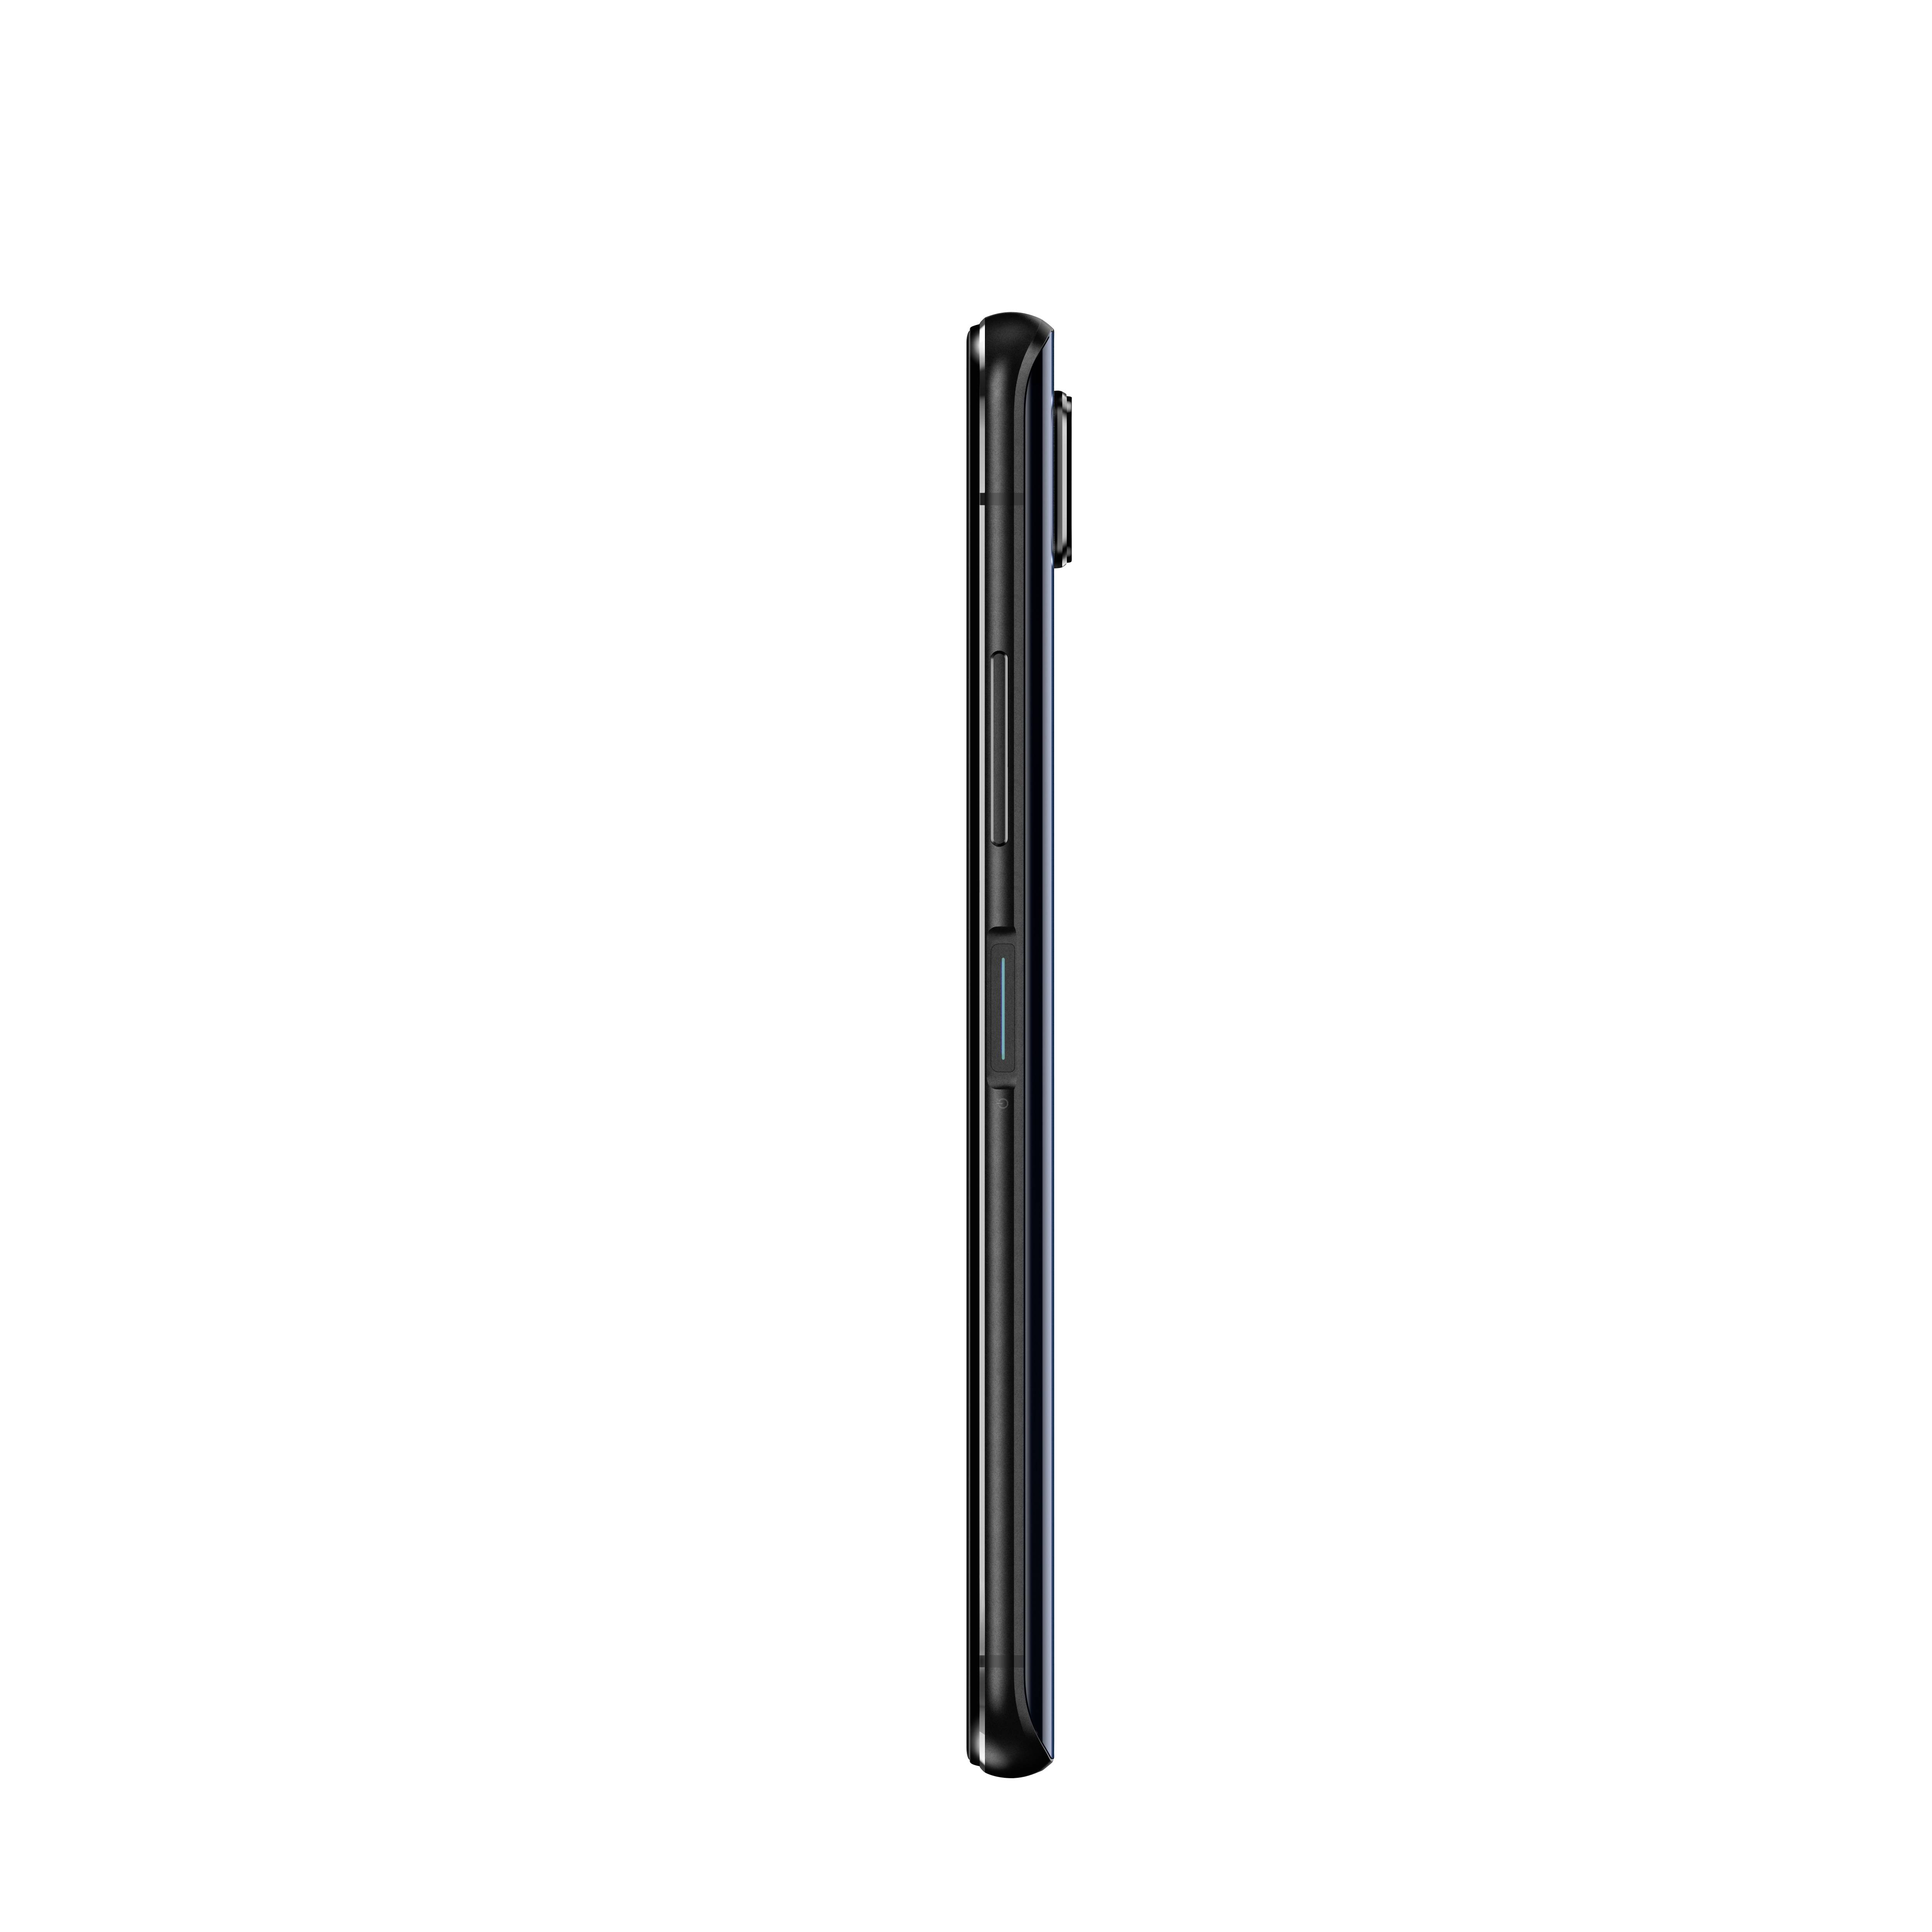 Asus ZenFone 7 Smartphone 128 GB 16.9 cm (6.67 inch) Black Android 